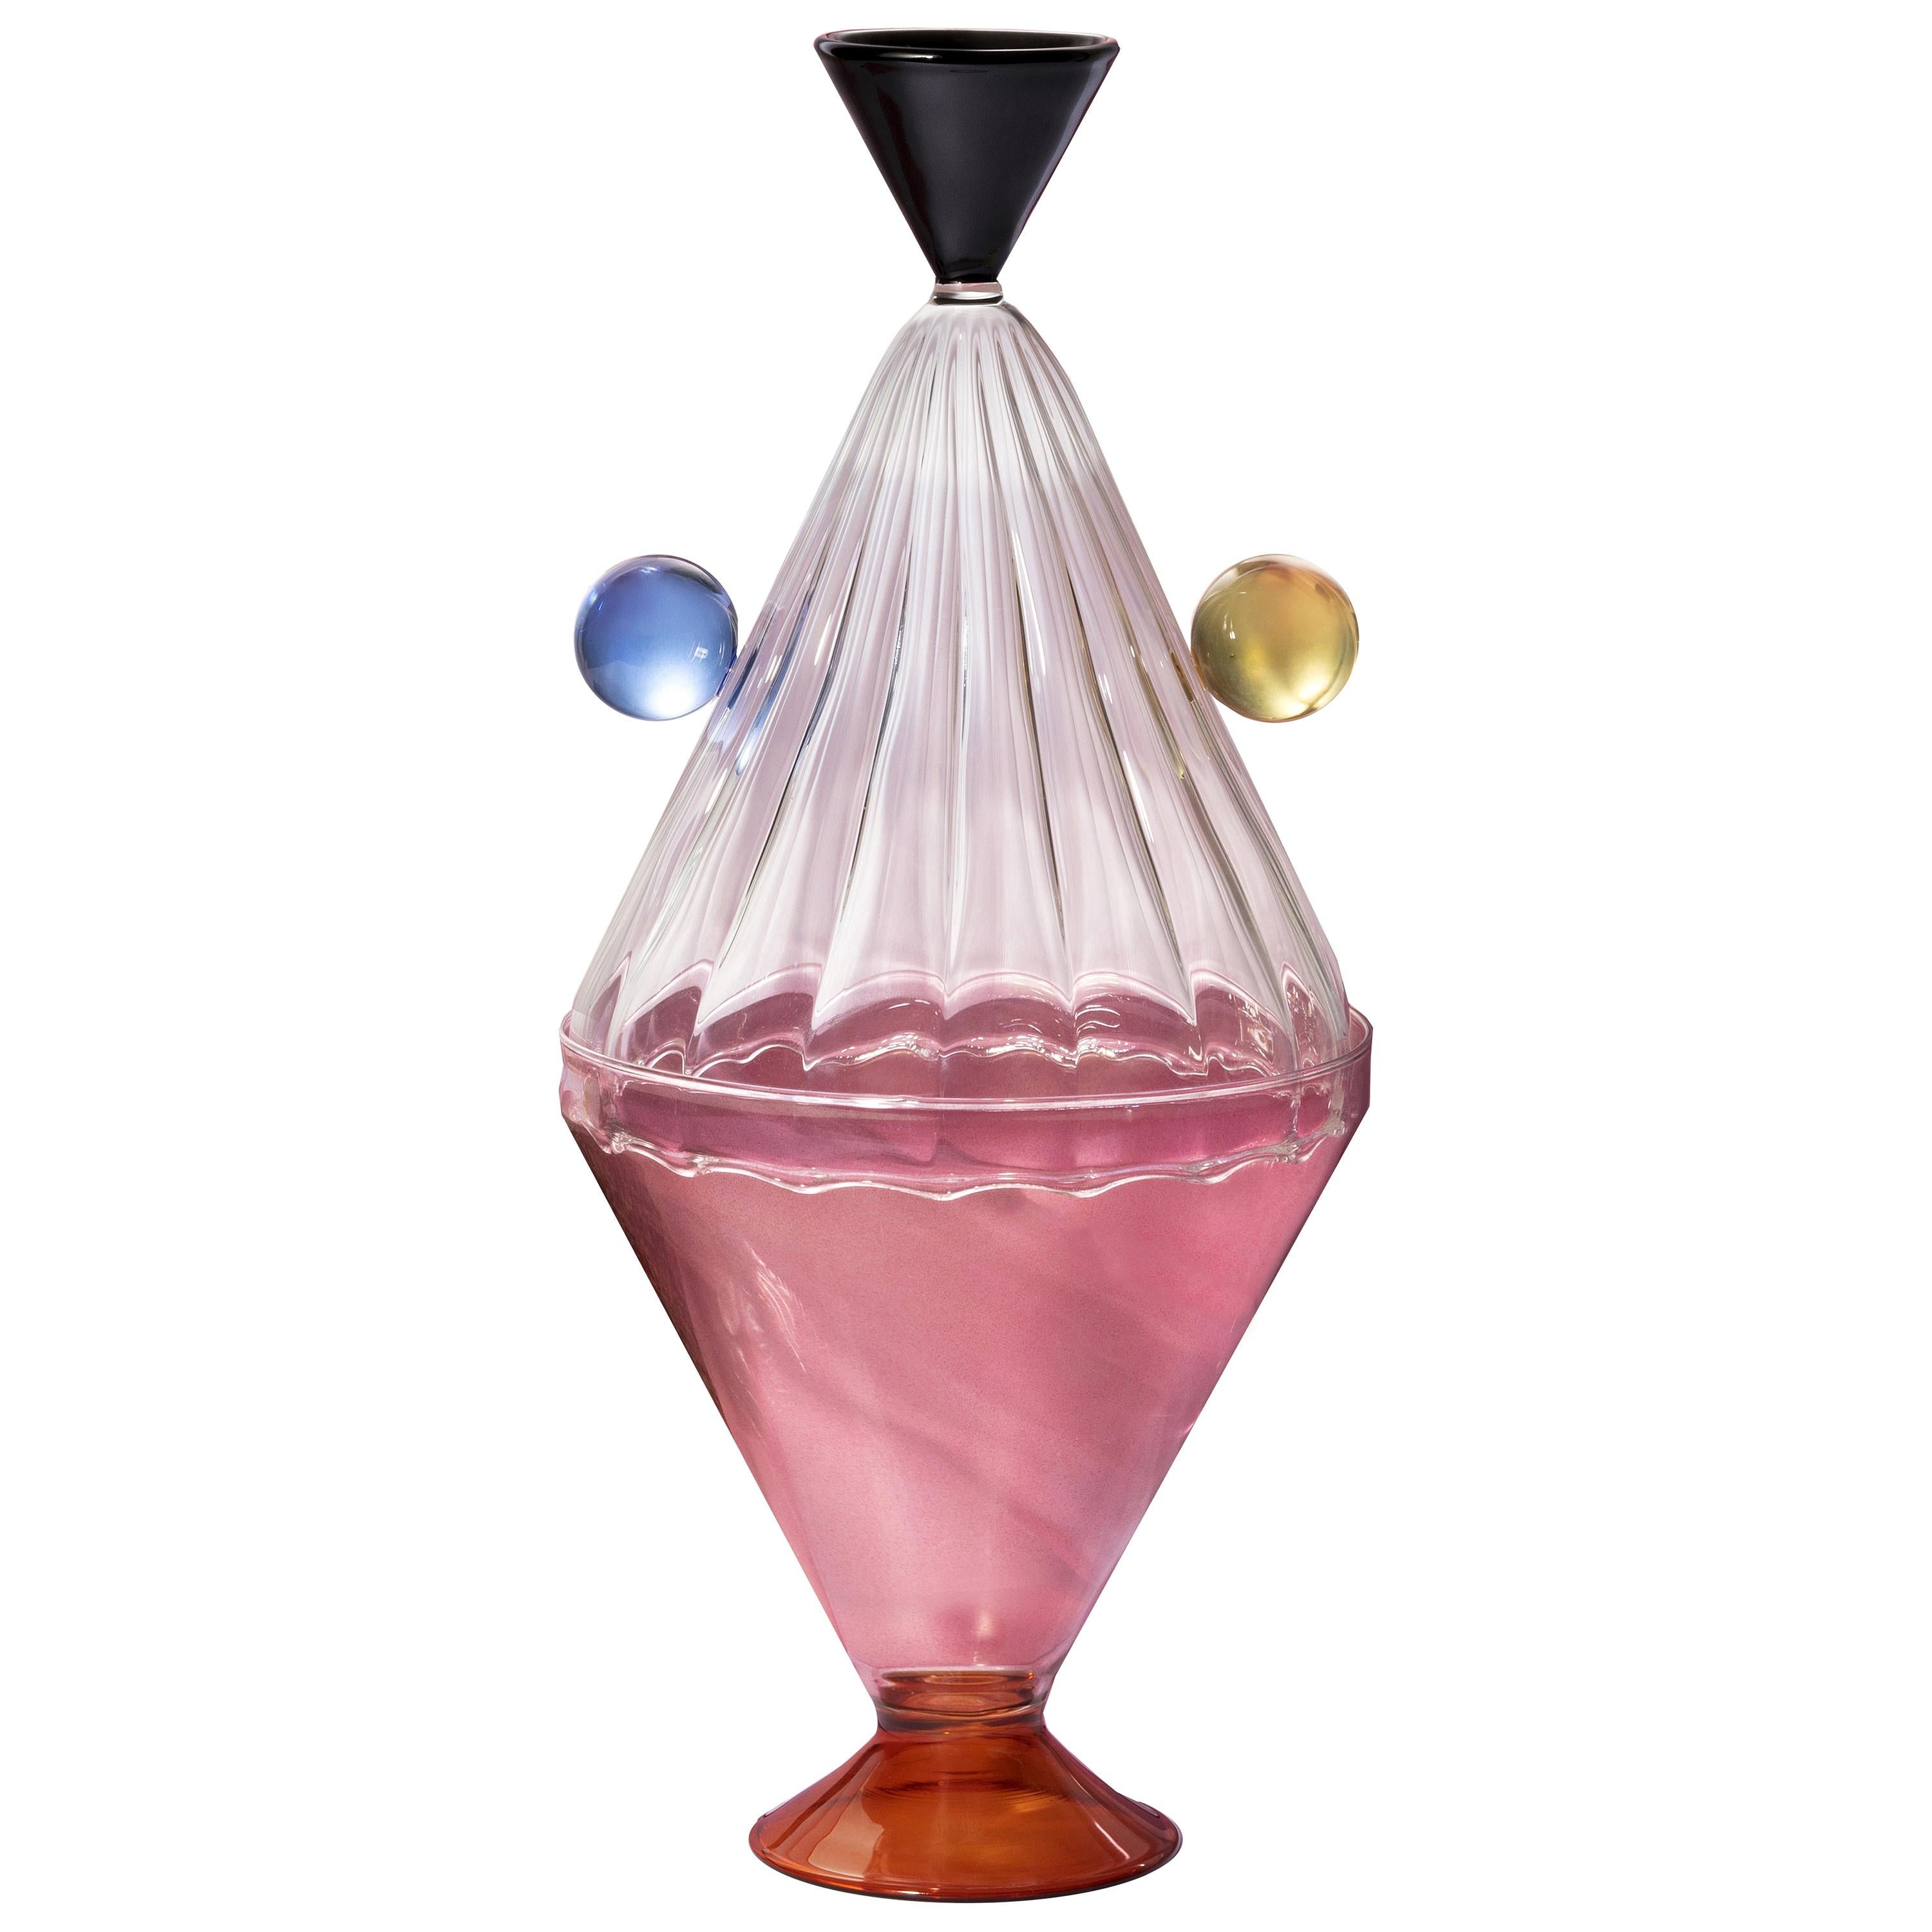 Arabesque Glass Vase by Serena Confalonieri